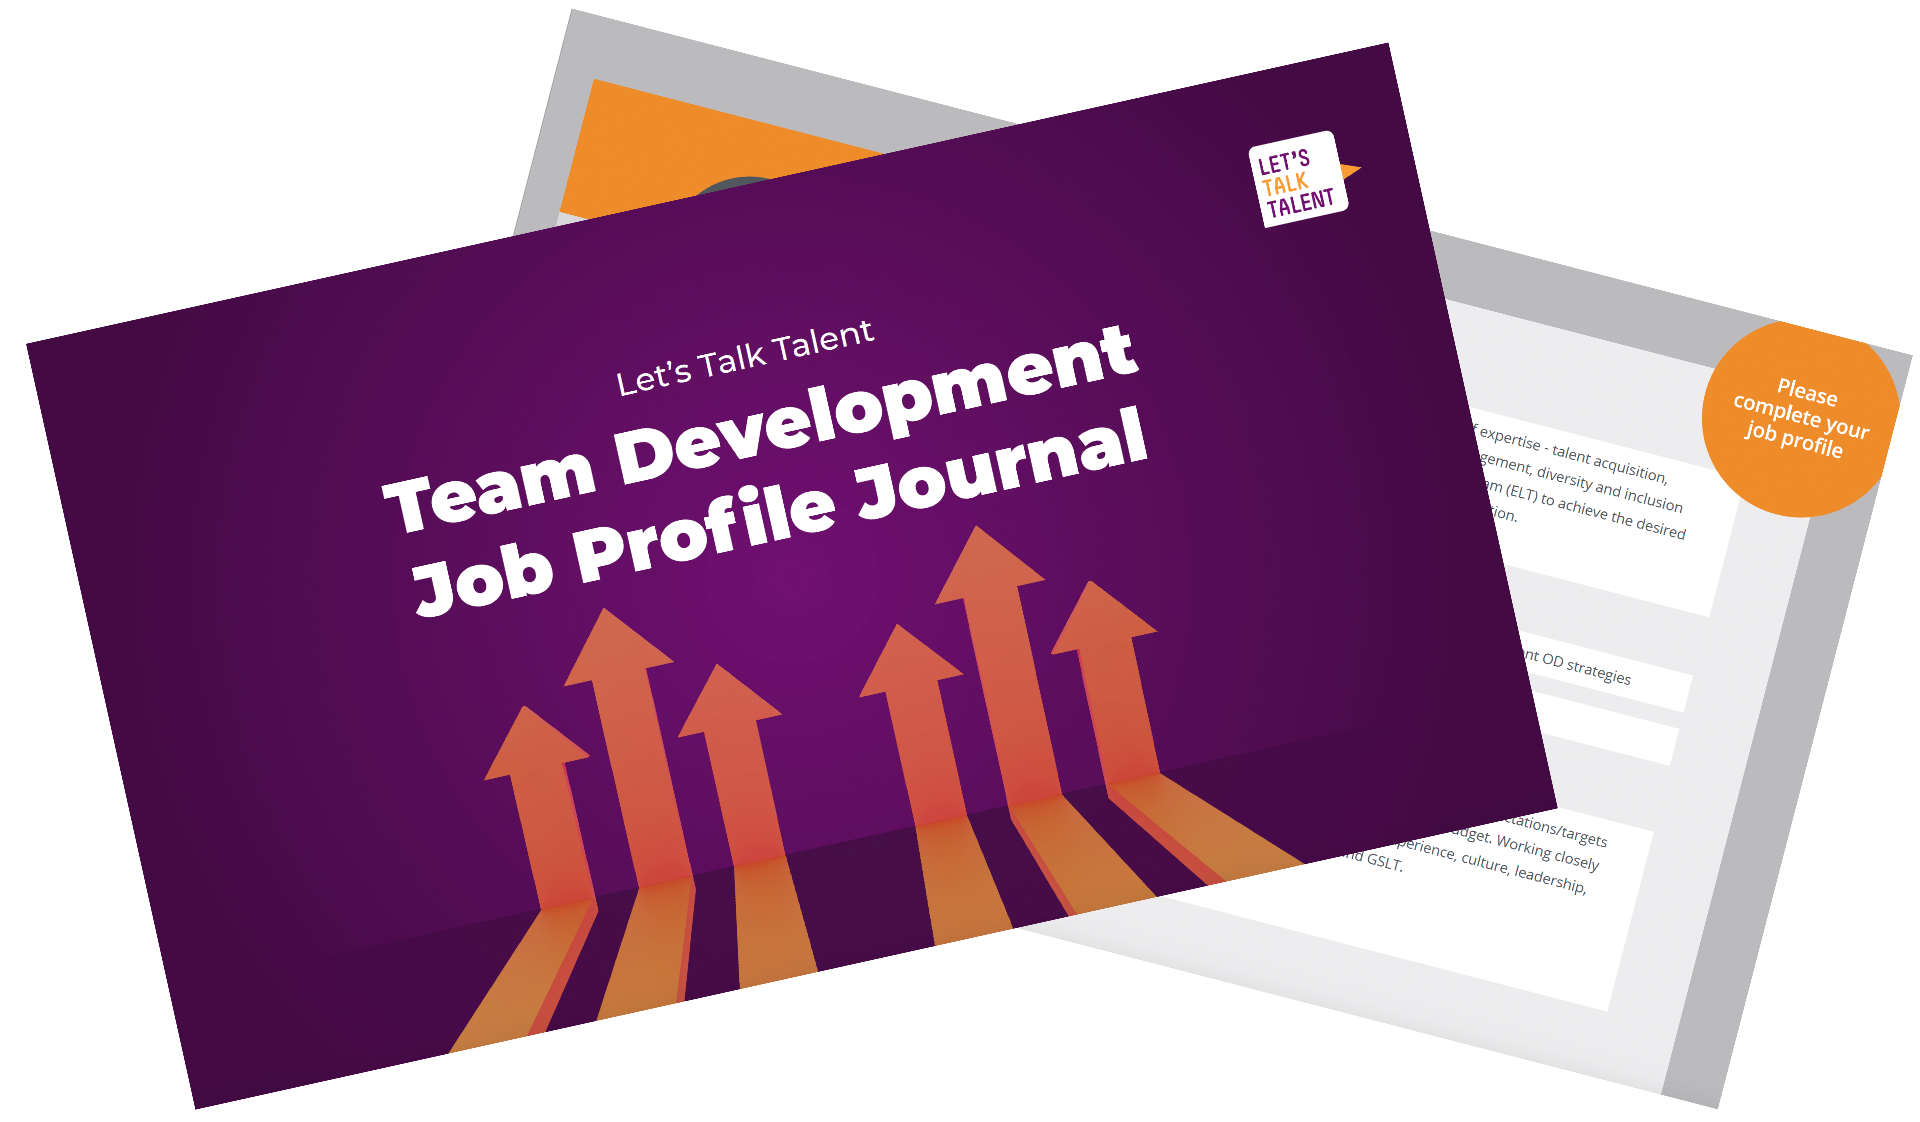 Download our Team Development Job Profile Journal template